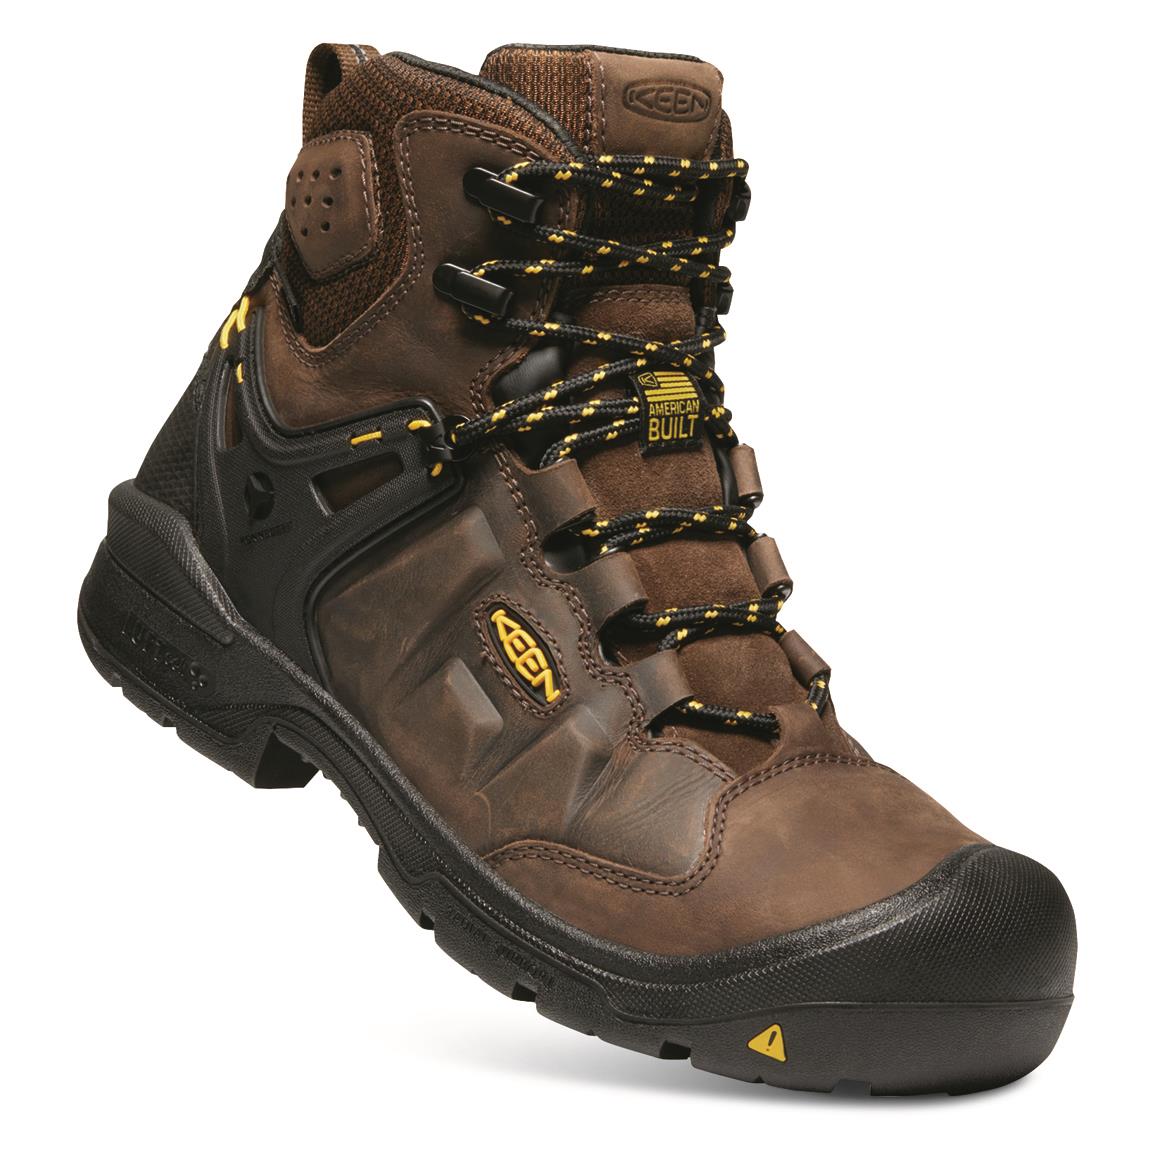 KEEN Utility Men's Dover Waterproof 6" Safety Toe Work Boots, Dark Earth/black